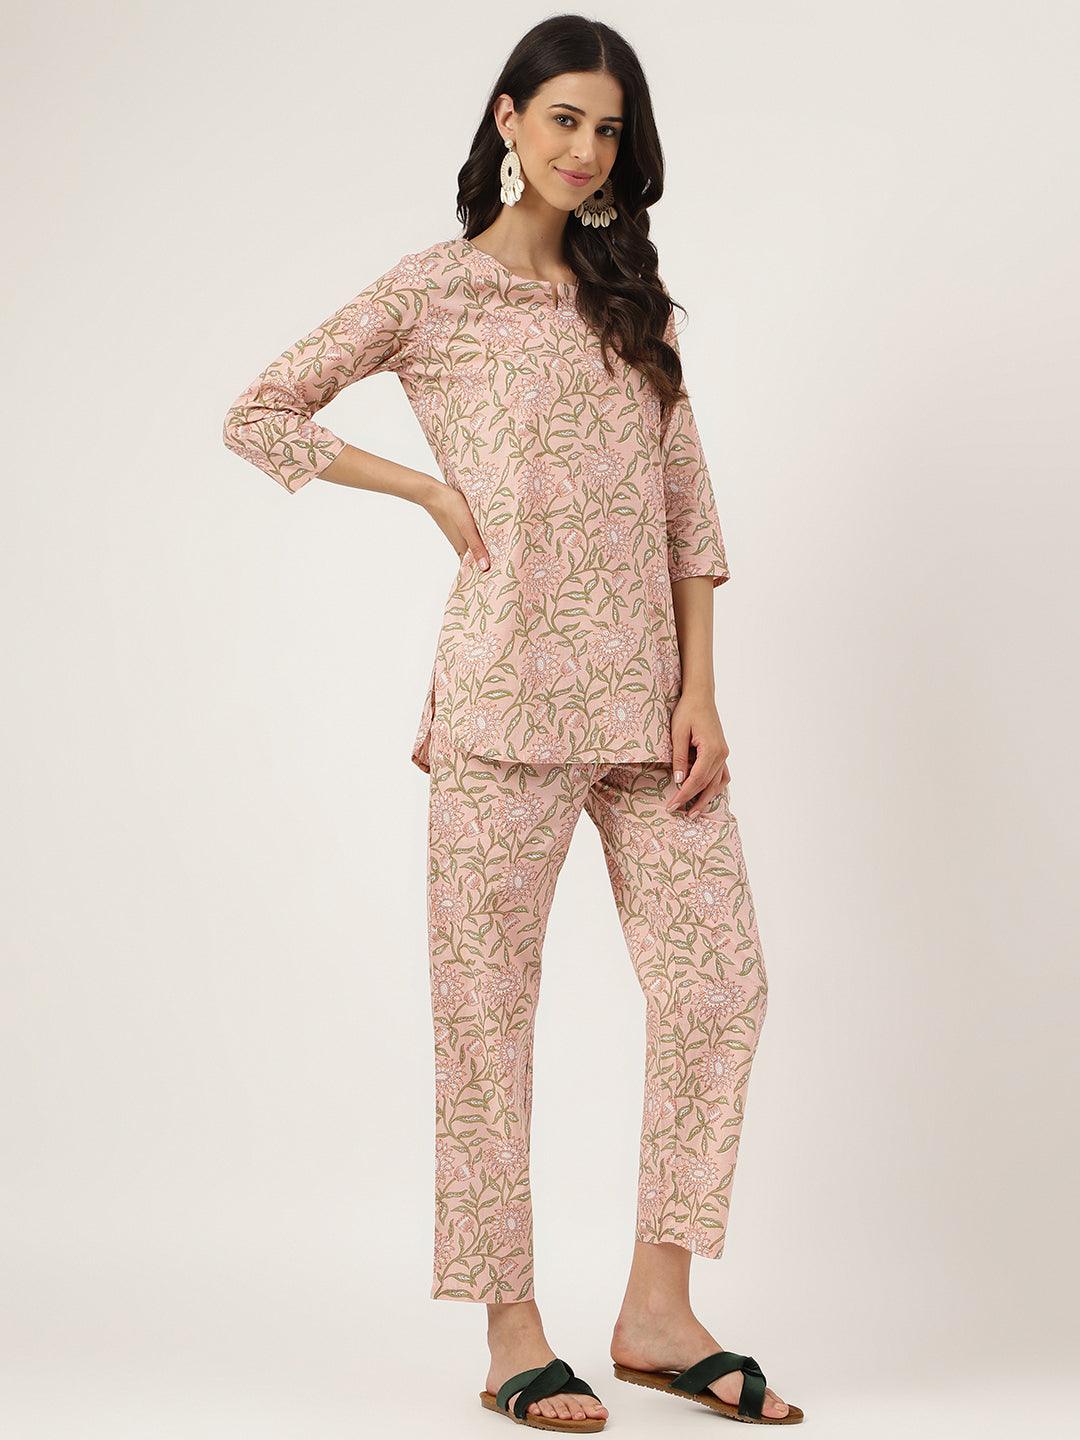 Divena Pink Printed Loungewear/Nightwear - divena world